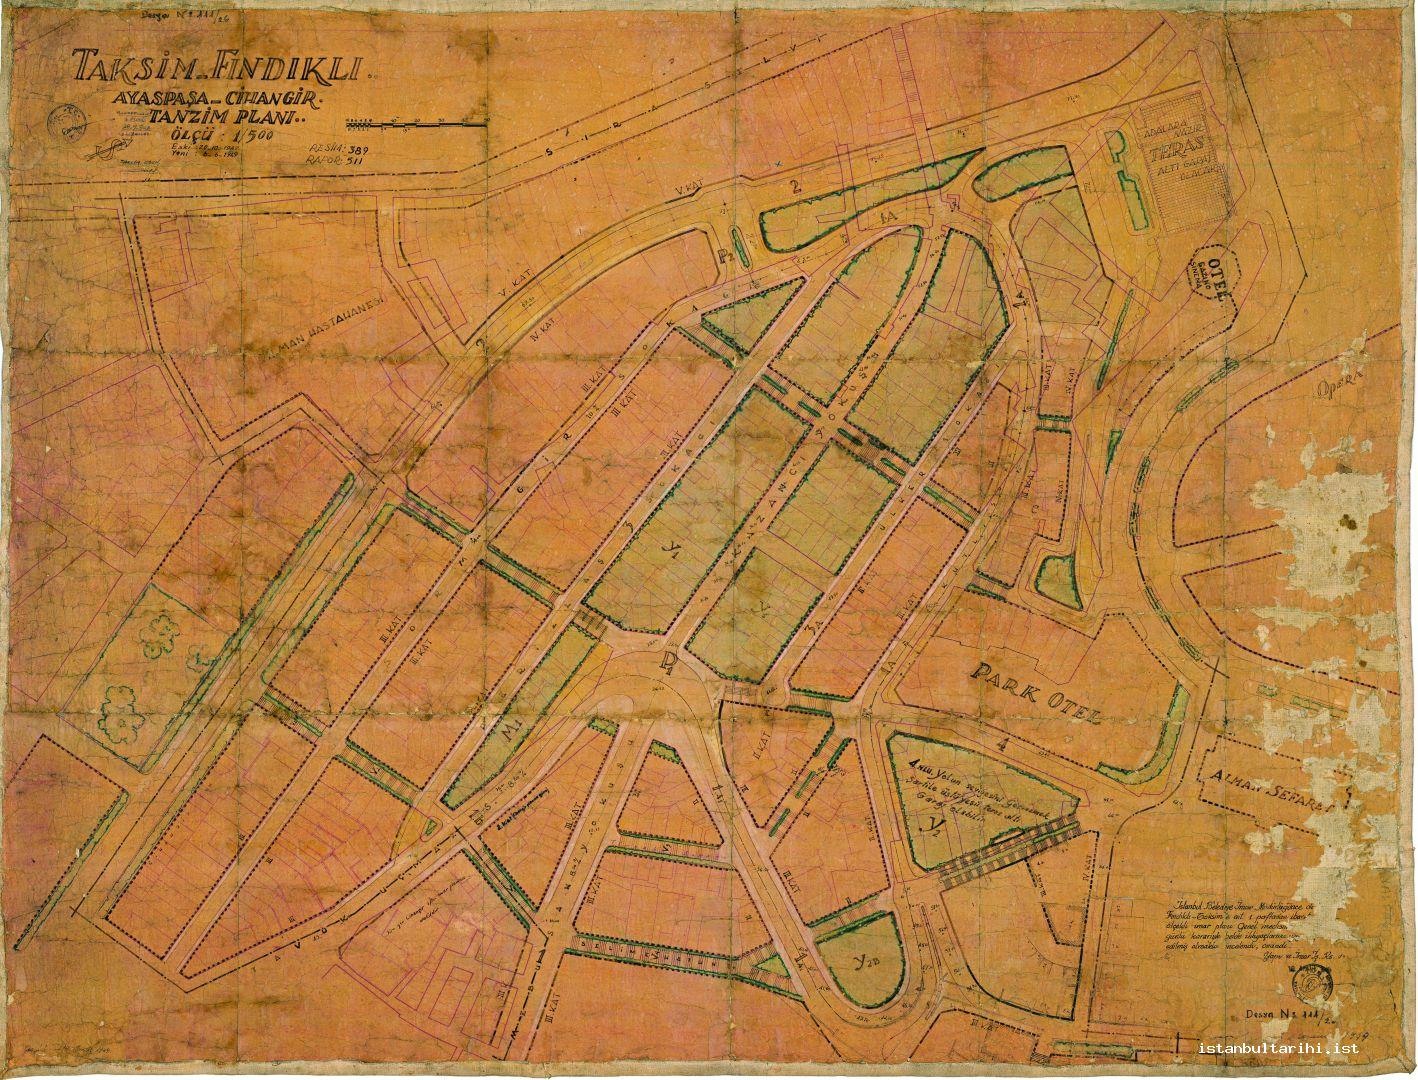 22- Henri Prost’s “Mecidiyeköy Arrangement Plan,” 28 September 1948 (Istanbul Metropolitan Municipality Archive)